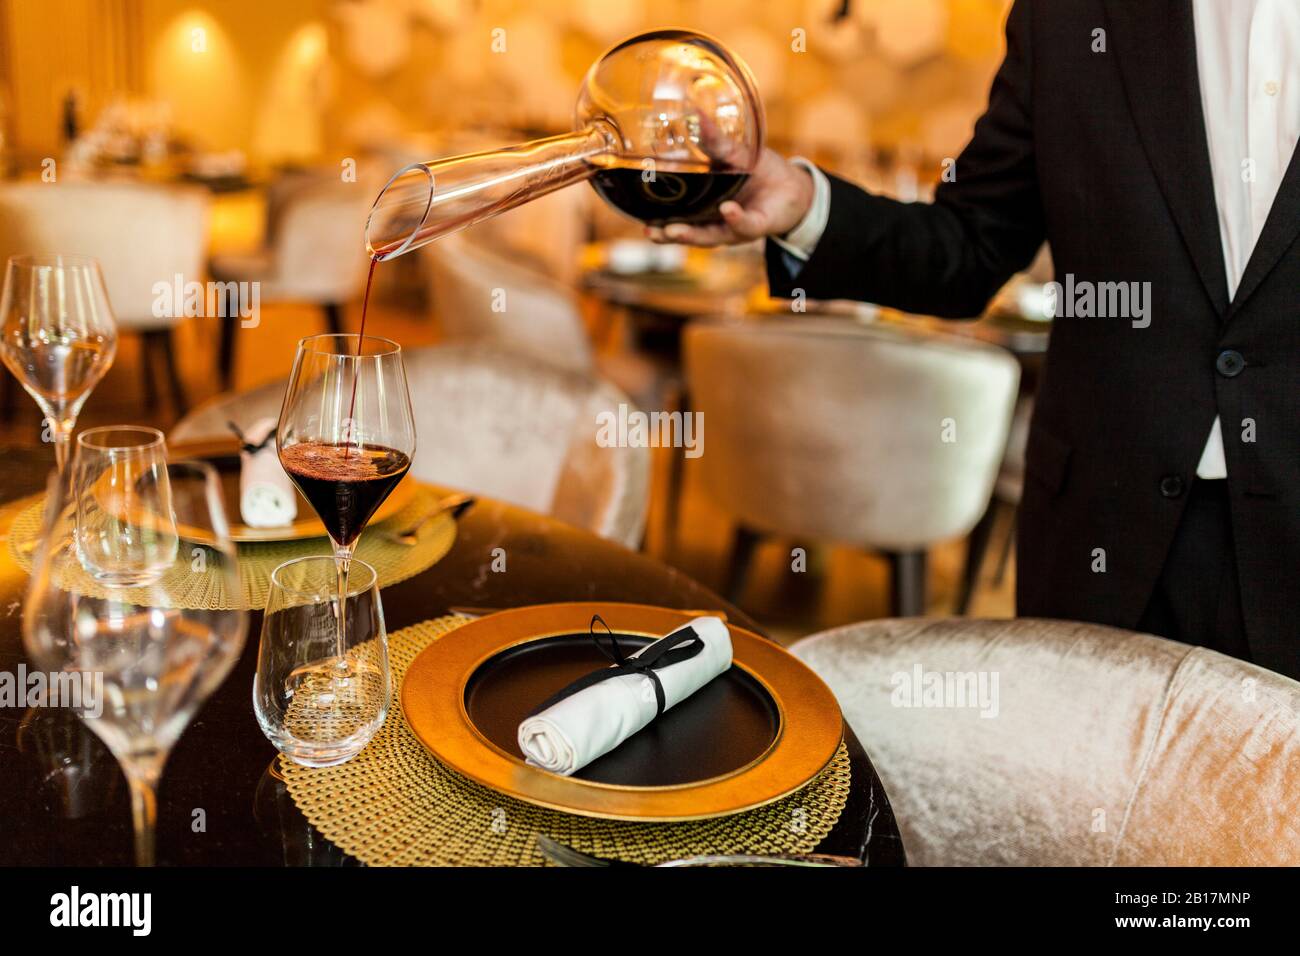 https://c8.alamy.com/comp/2B17MNP/waiter-pouring-wine-from-decanter-into-glass-in-fancy-restaurant-2B17MNP.jpg